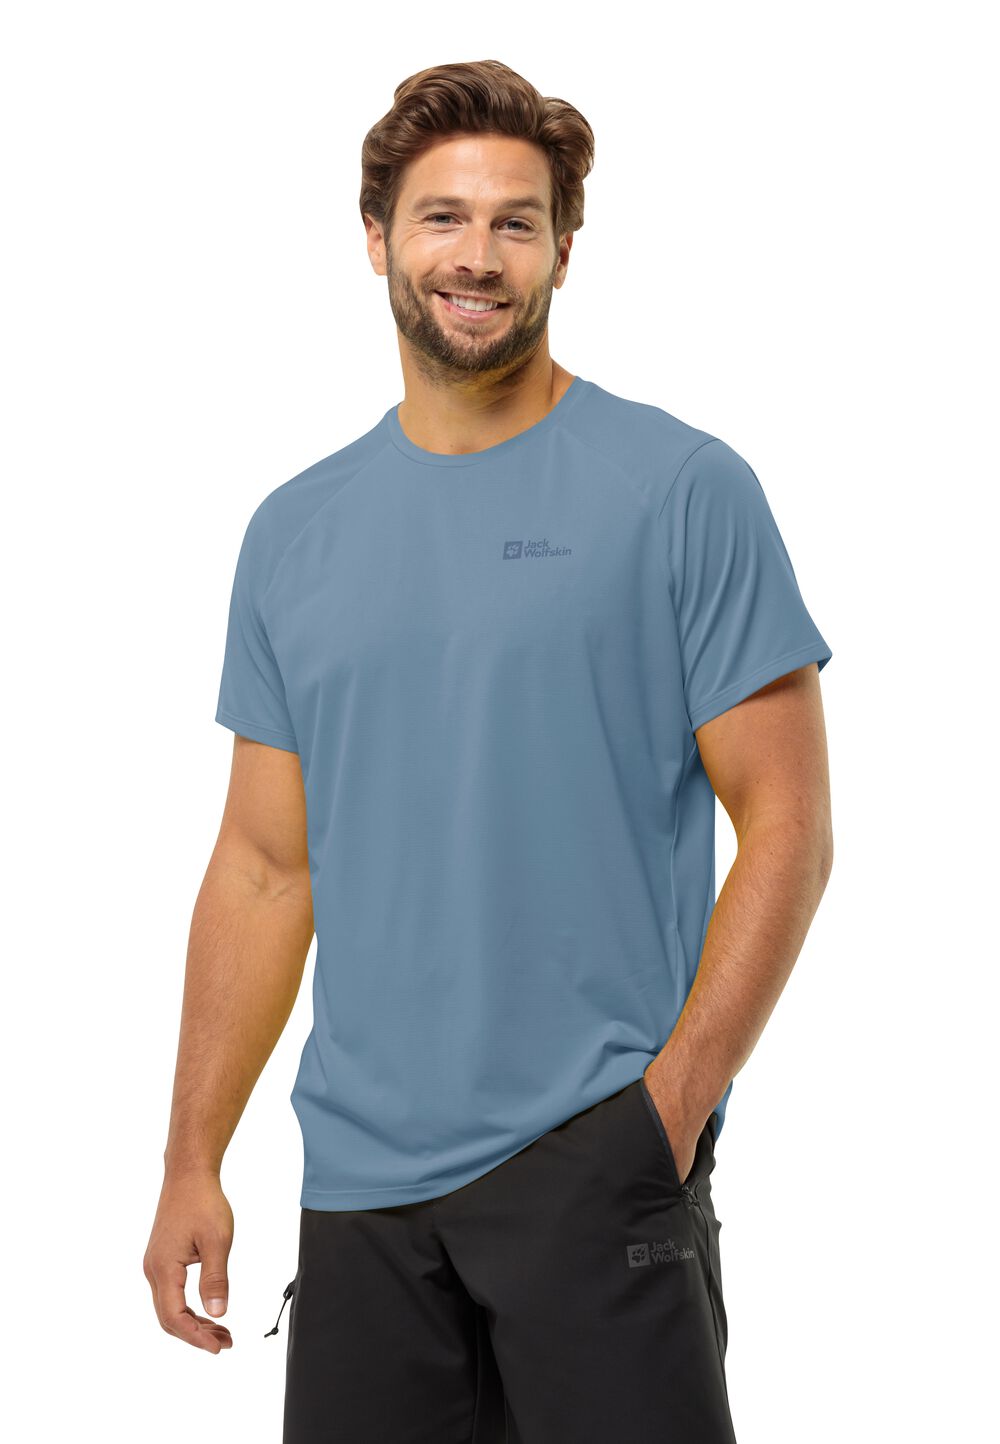 Jack Wolfskin Prelight Trail T-Shirt Men Functioneel shirt Heren XL elemental blue elemental blue